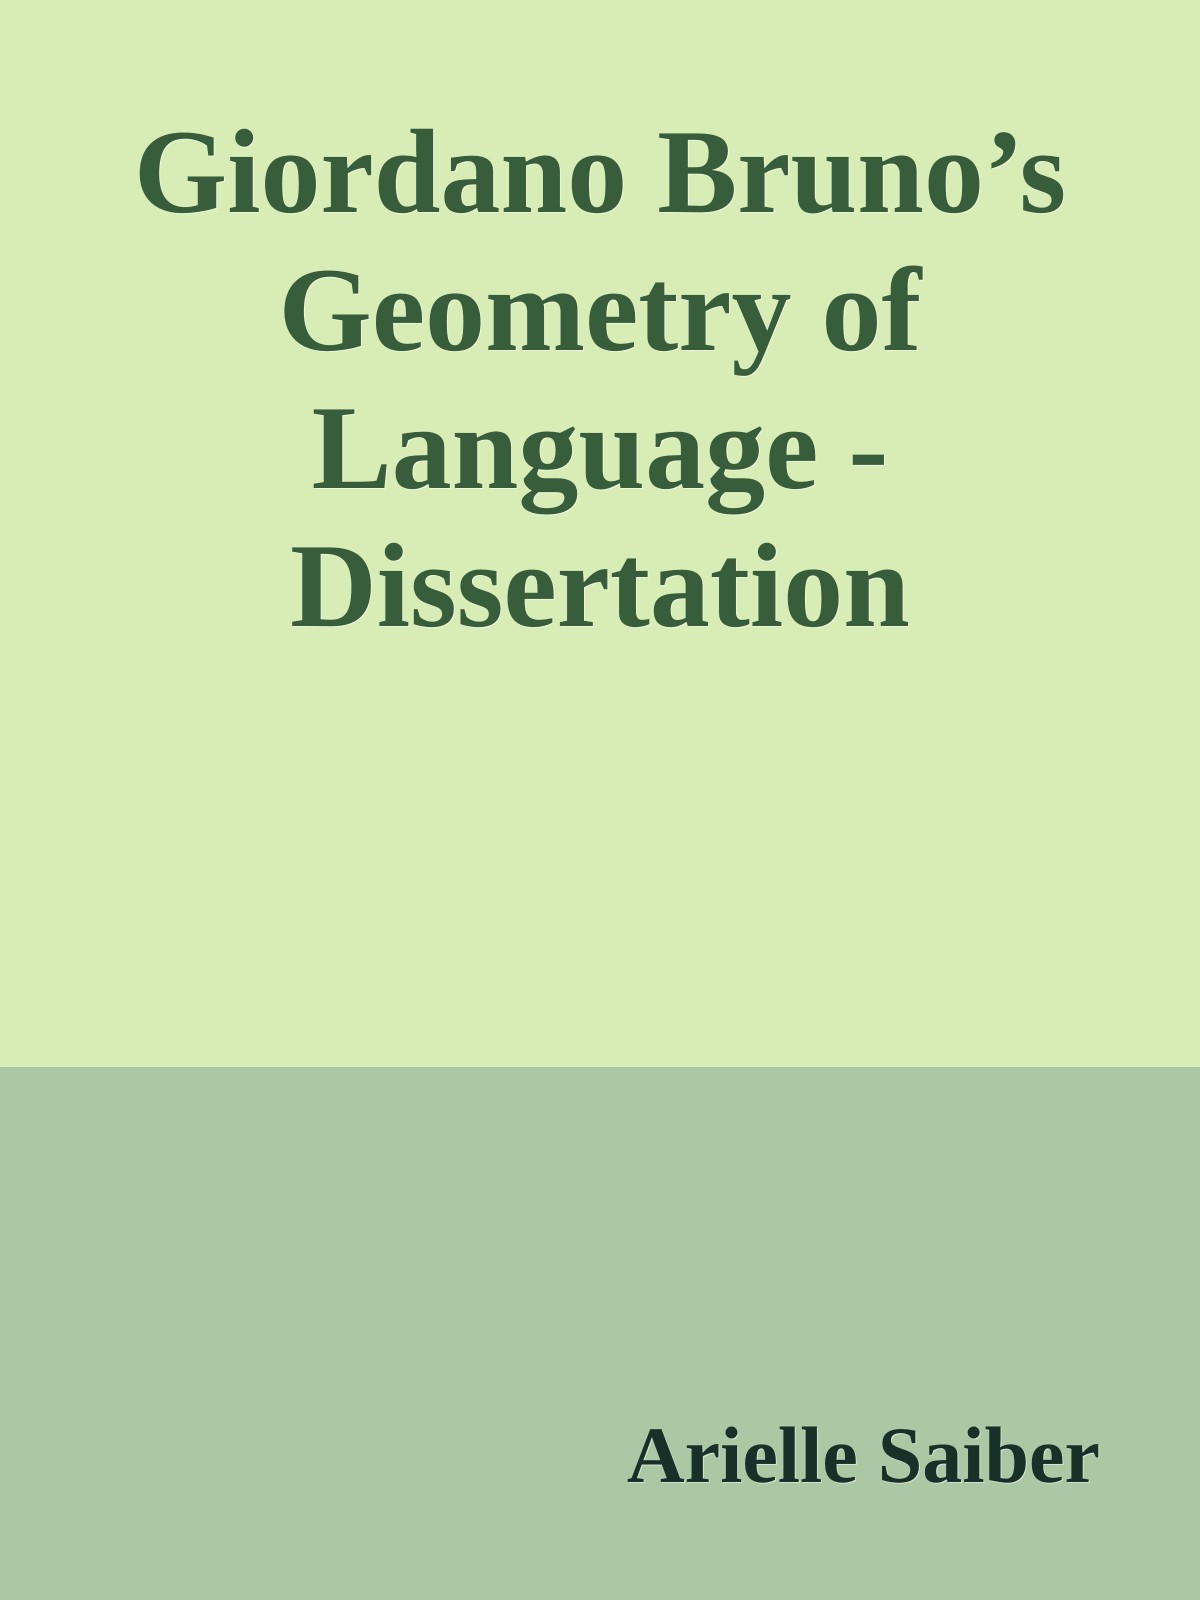 Giordano Bruno’s Geometry of Language - Dissertation